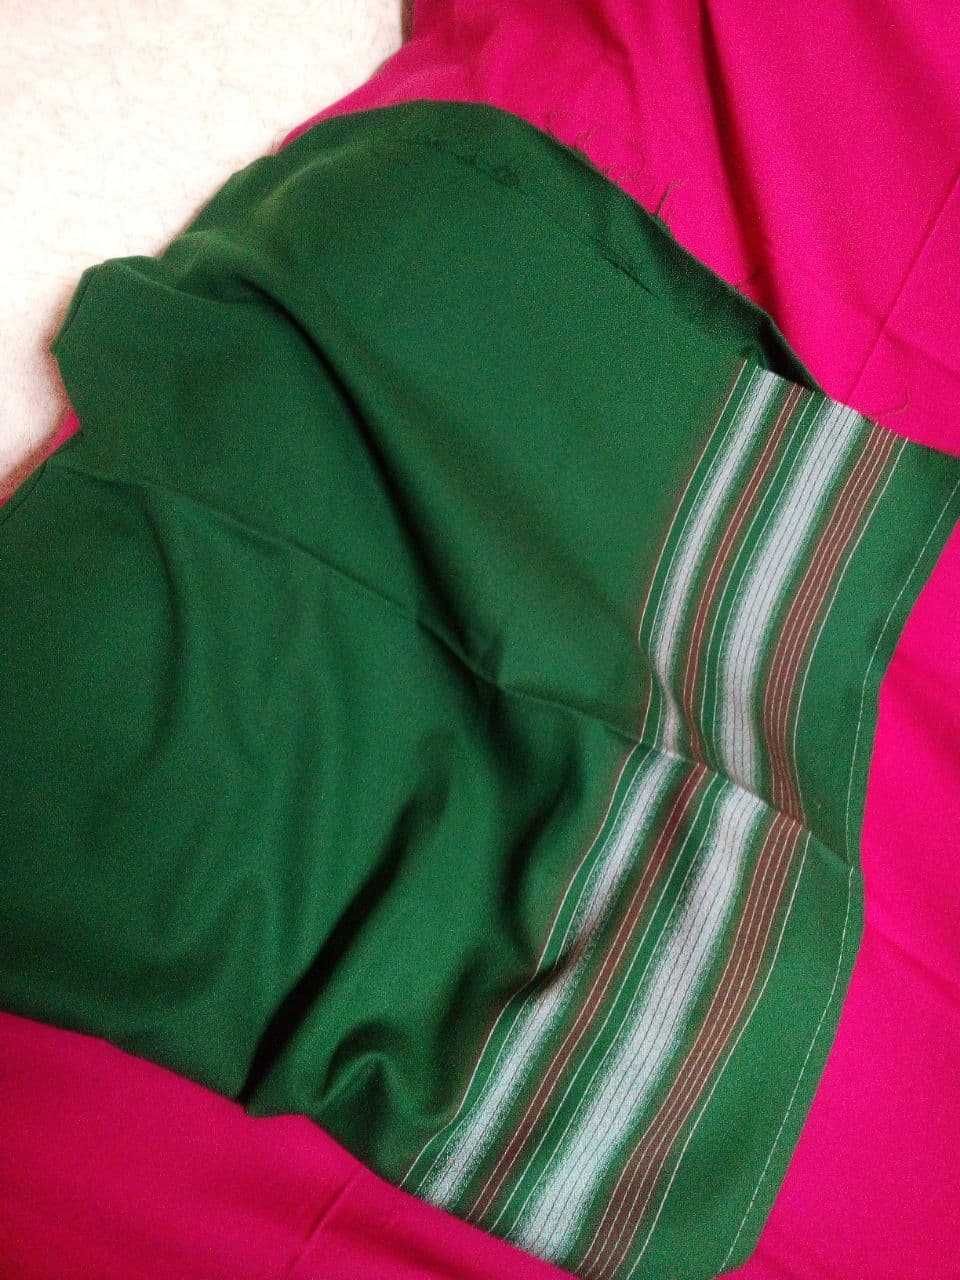 Ткань шерсть, цвет зеленый, размер 155х145см.Цена 70 тысяч